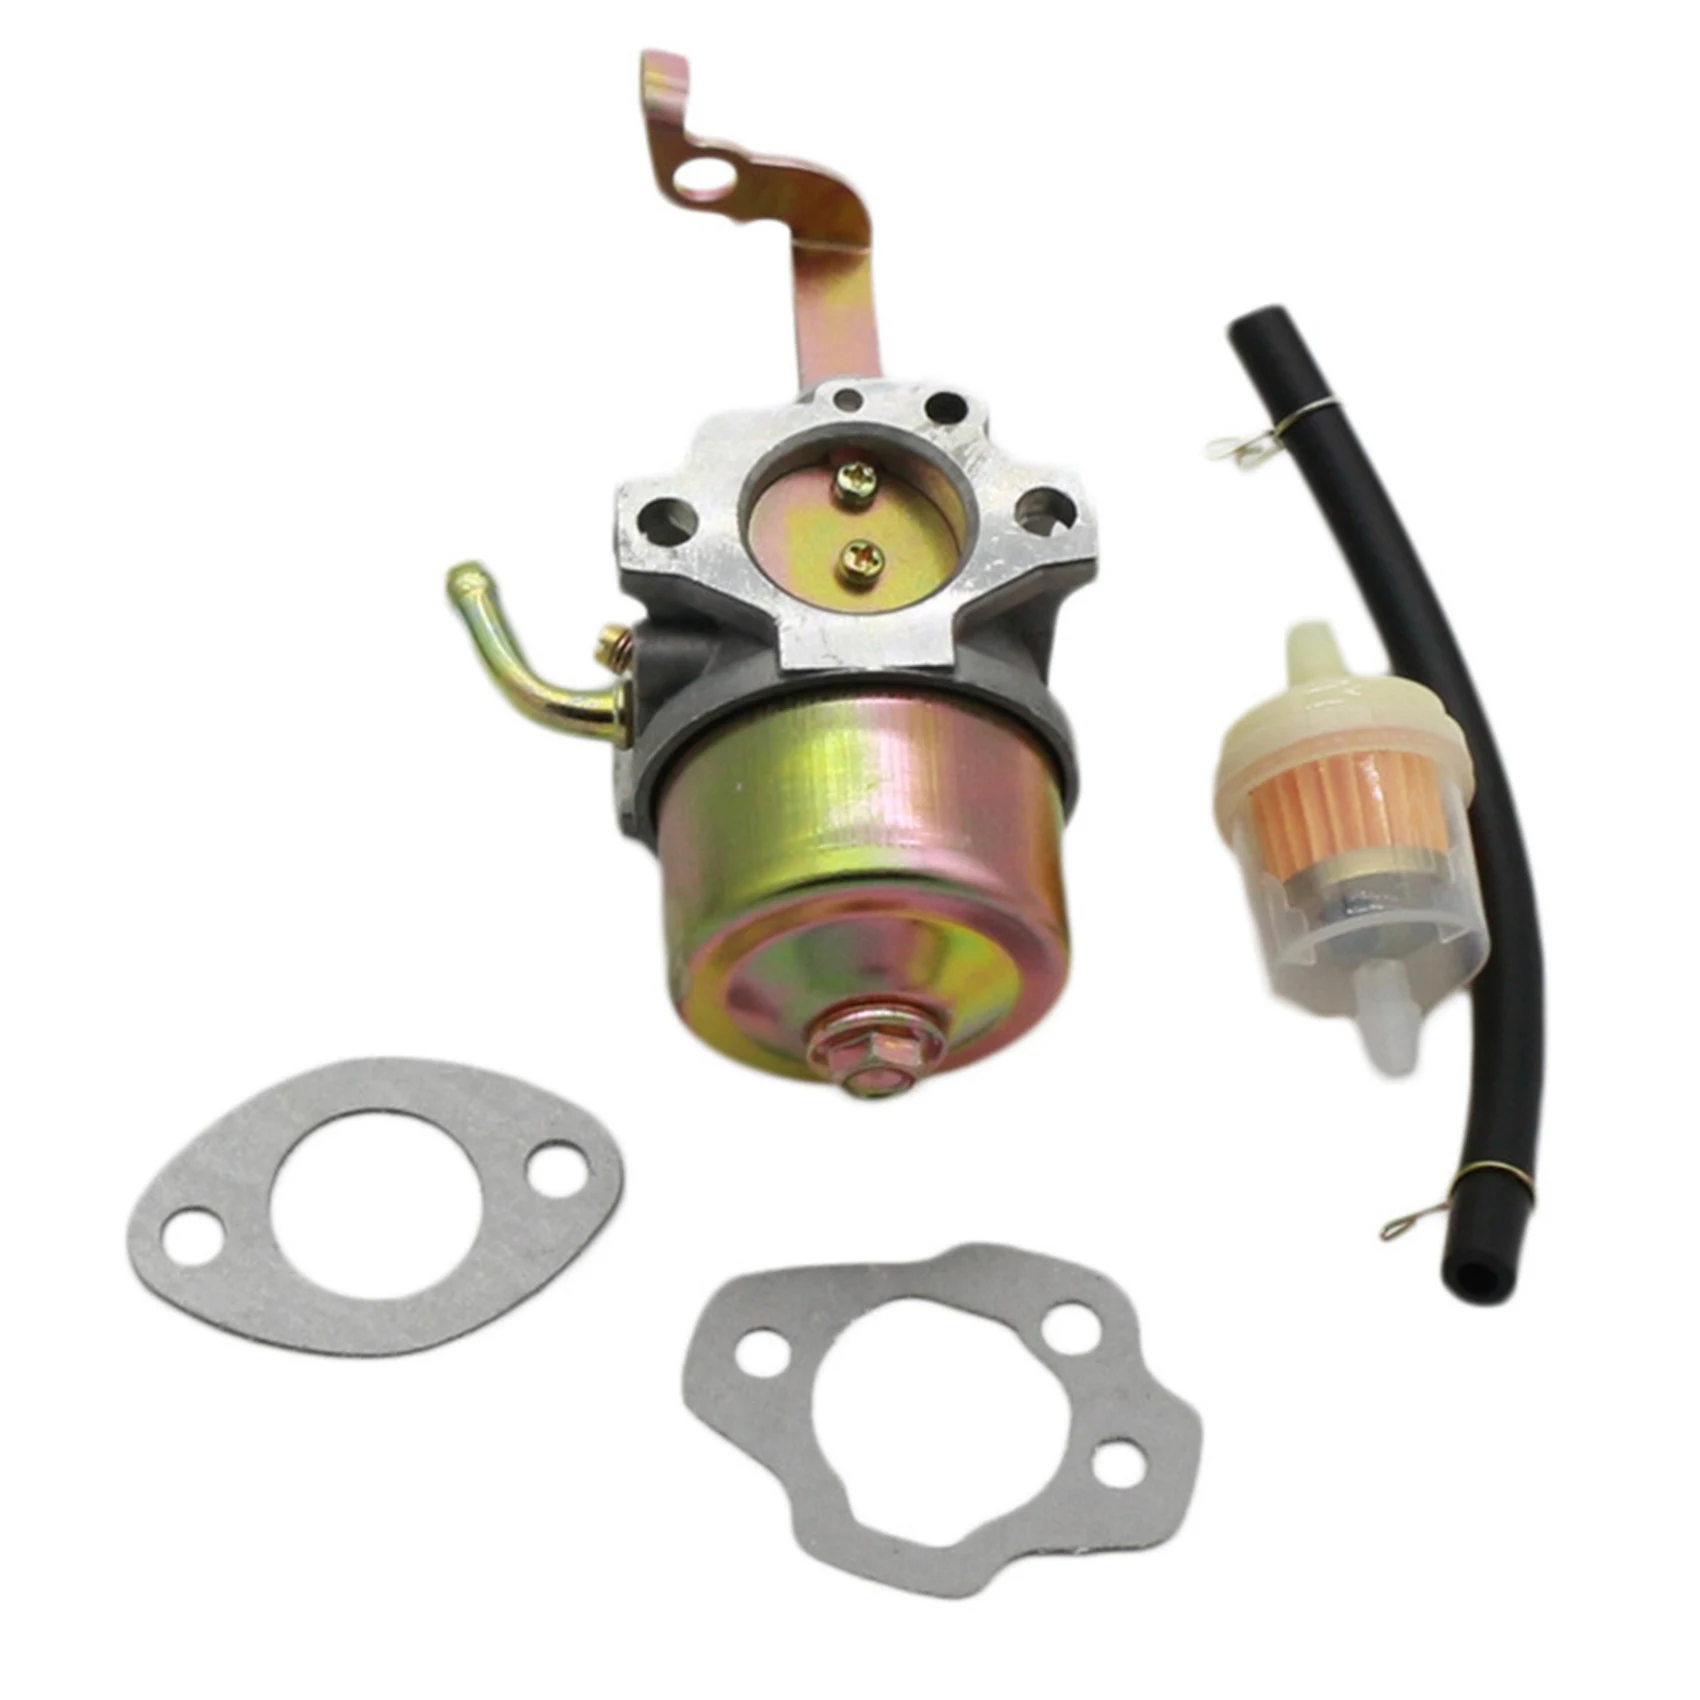 

Carburetor Carb Kit Set for Robin Wisconsin Subaru EY20 EY 20 EY15 227-62450-10 Carburetor Garden Tools Accessories